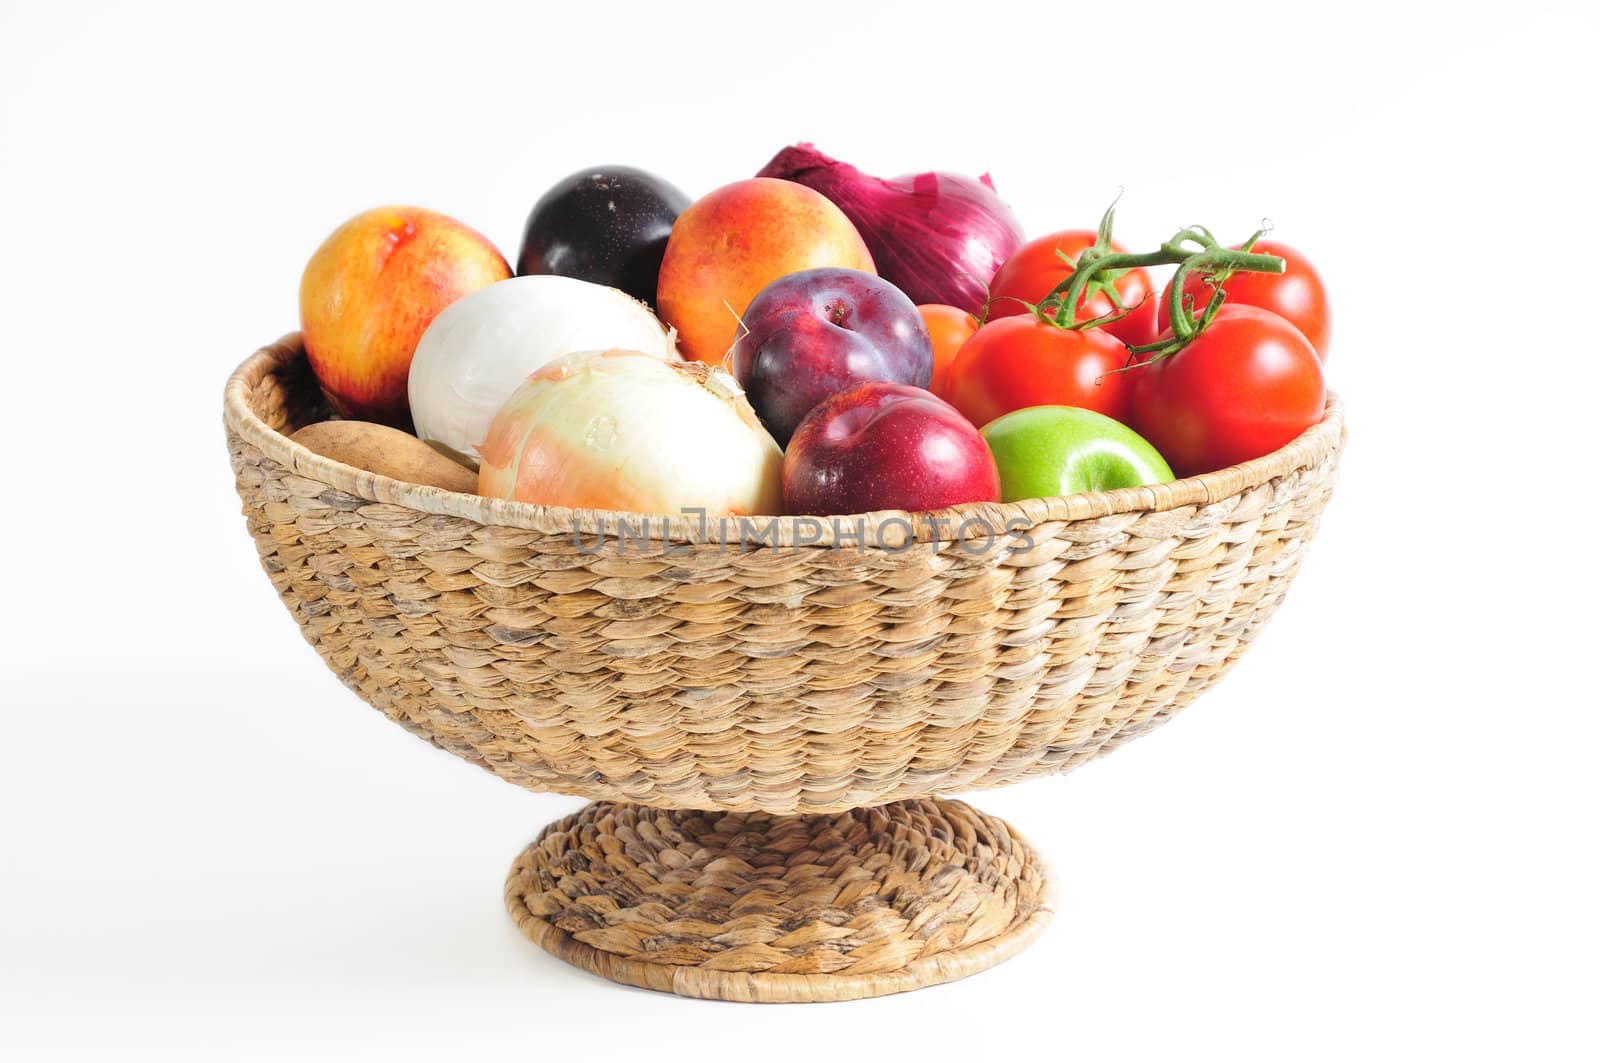 pedestal basket full of autumn fruits and vegetables